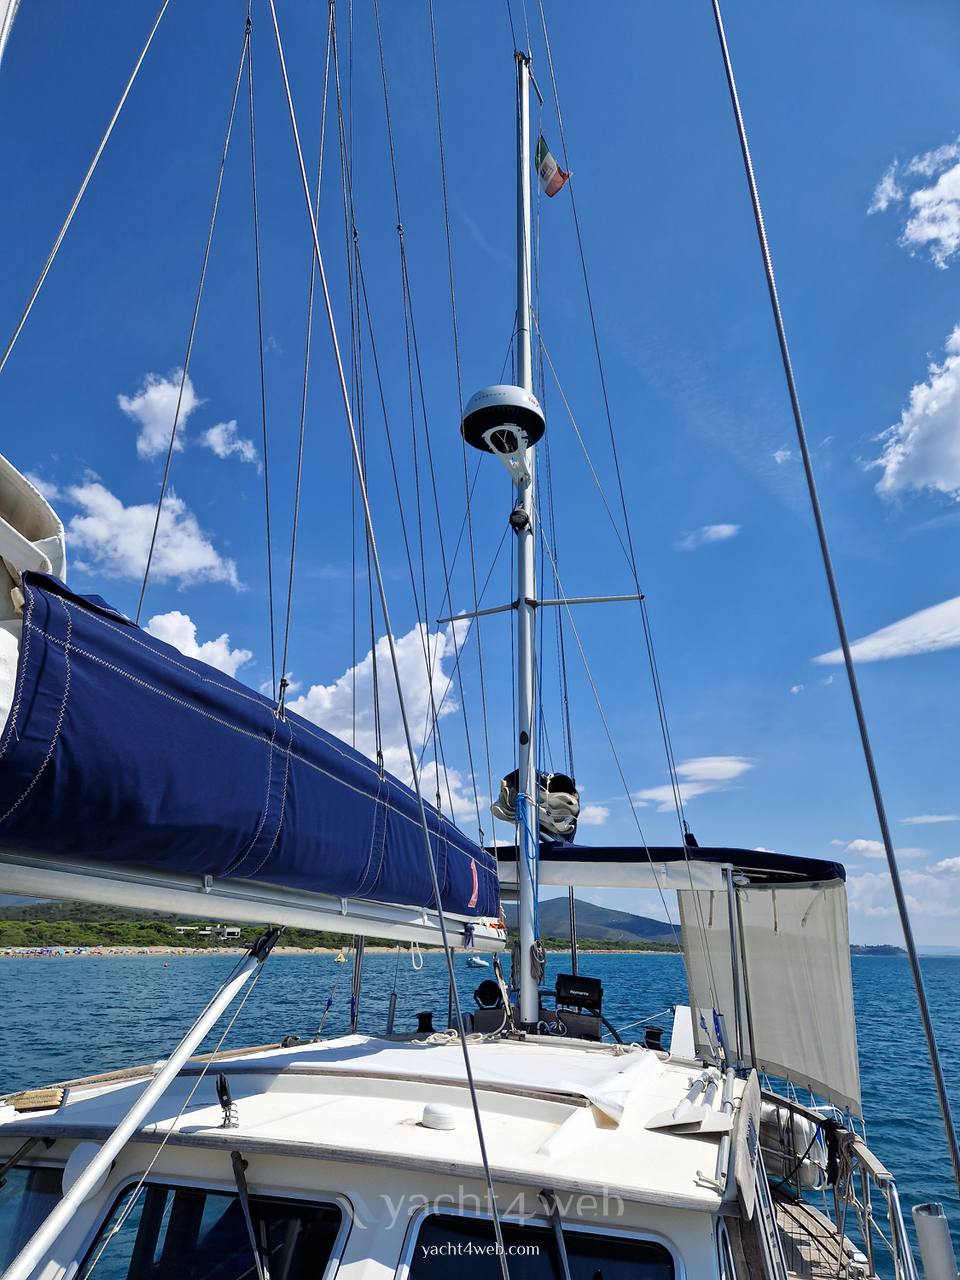 SYLTALA YACHT Nauticat 33 Barco à vela usado para venda